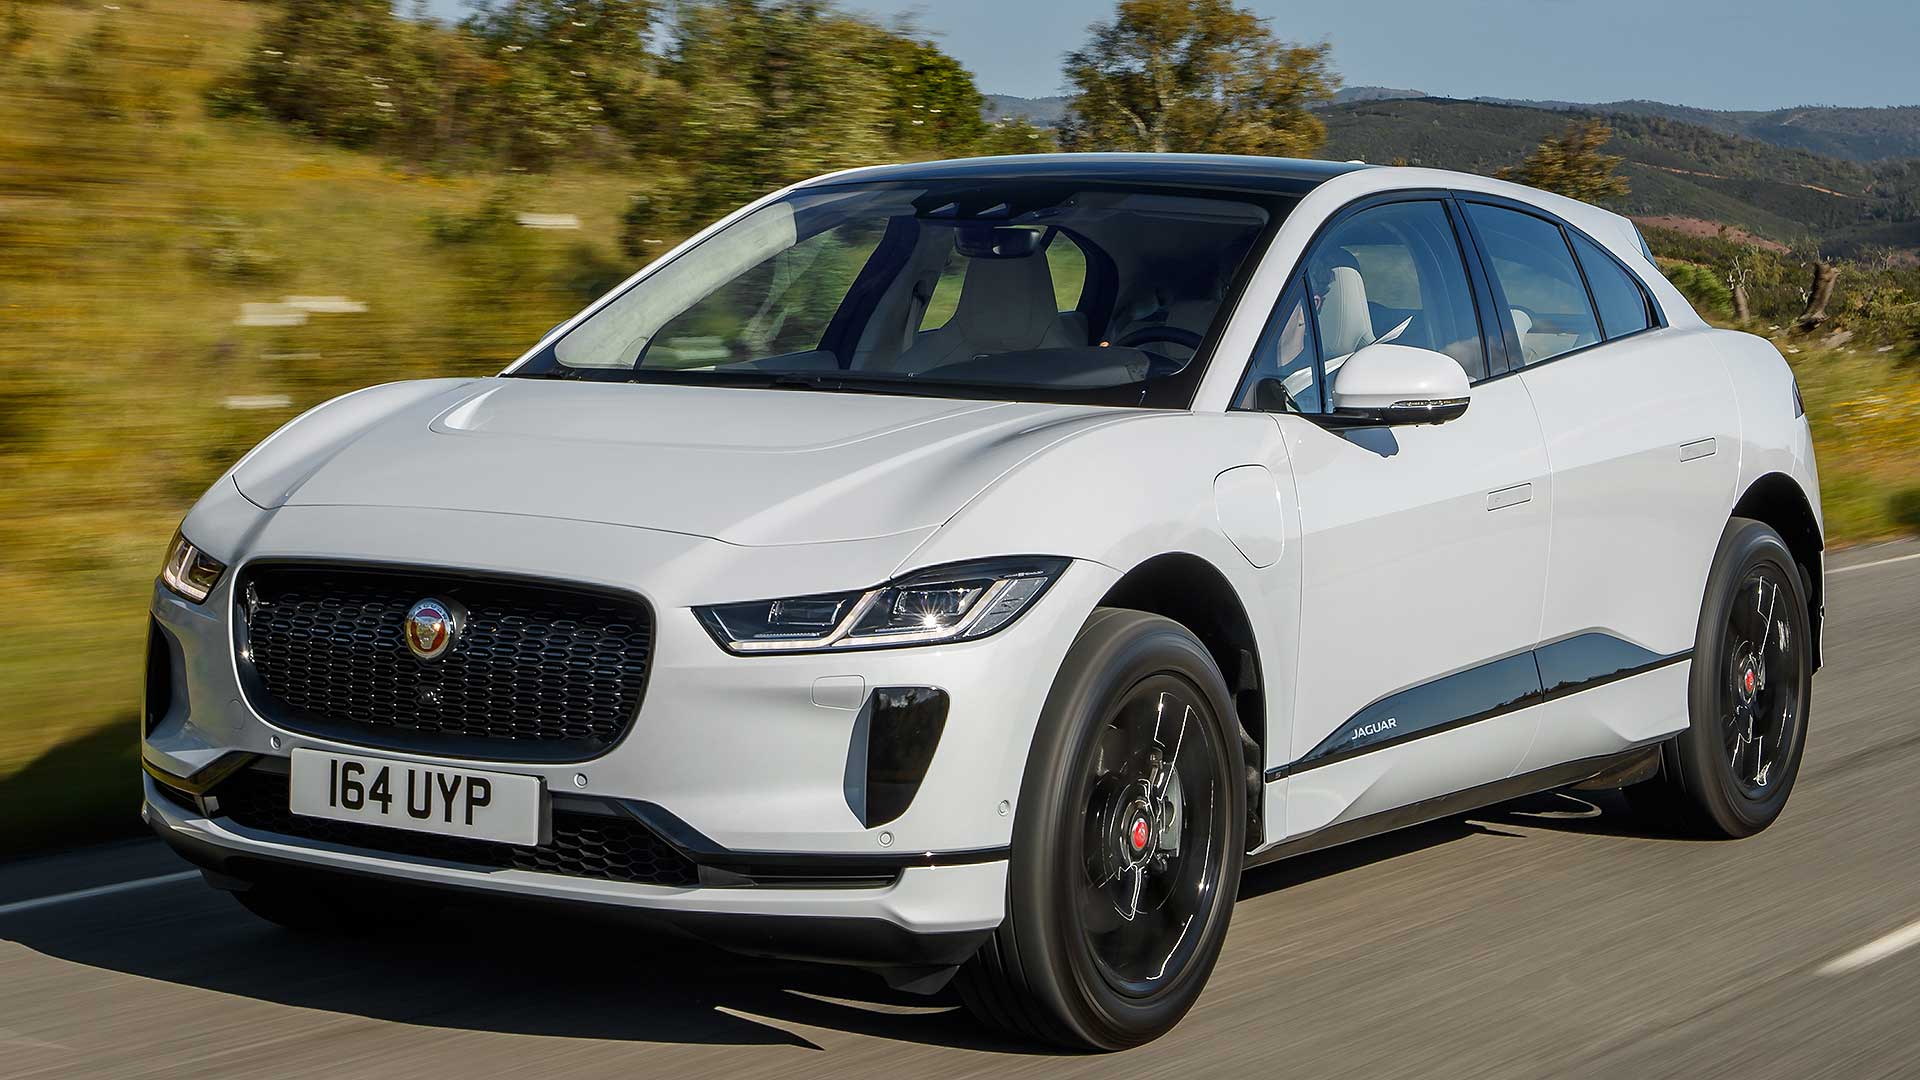 2019 Jaguar I-Pace keyless theft